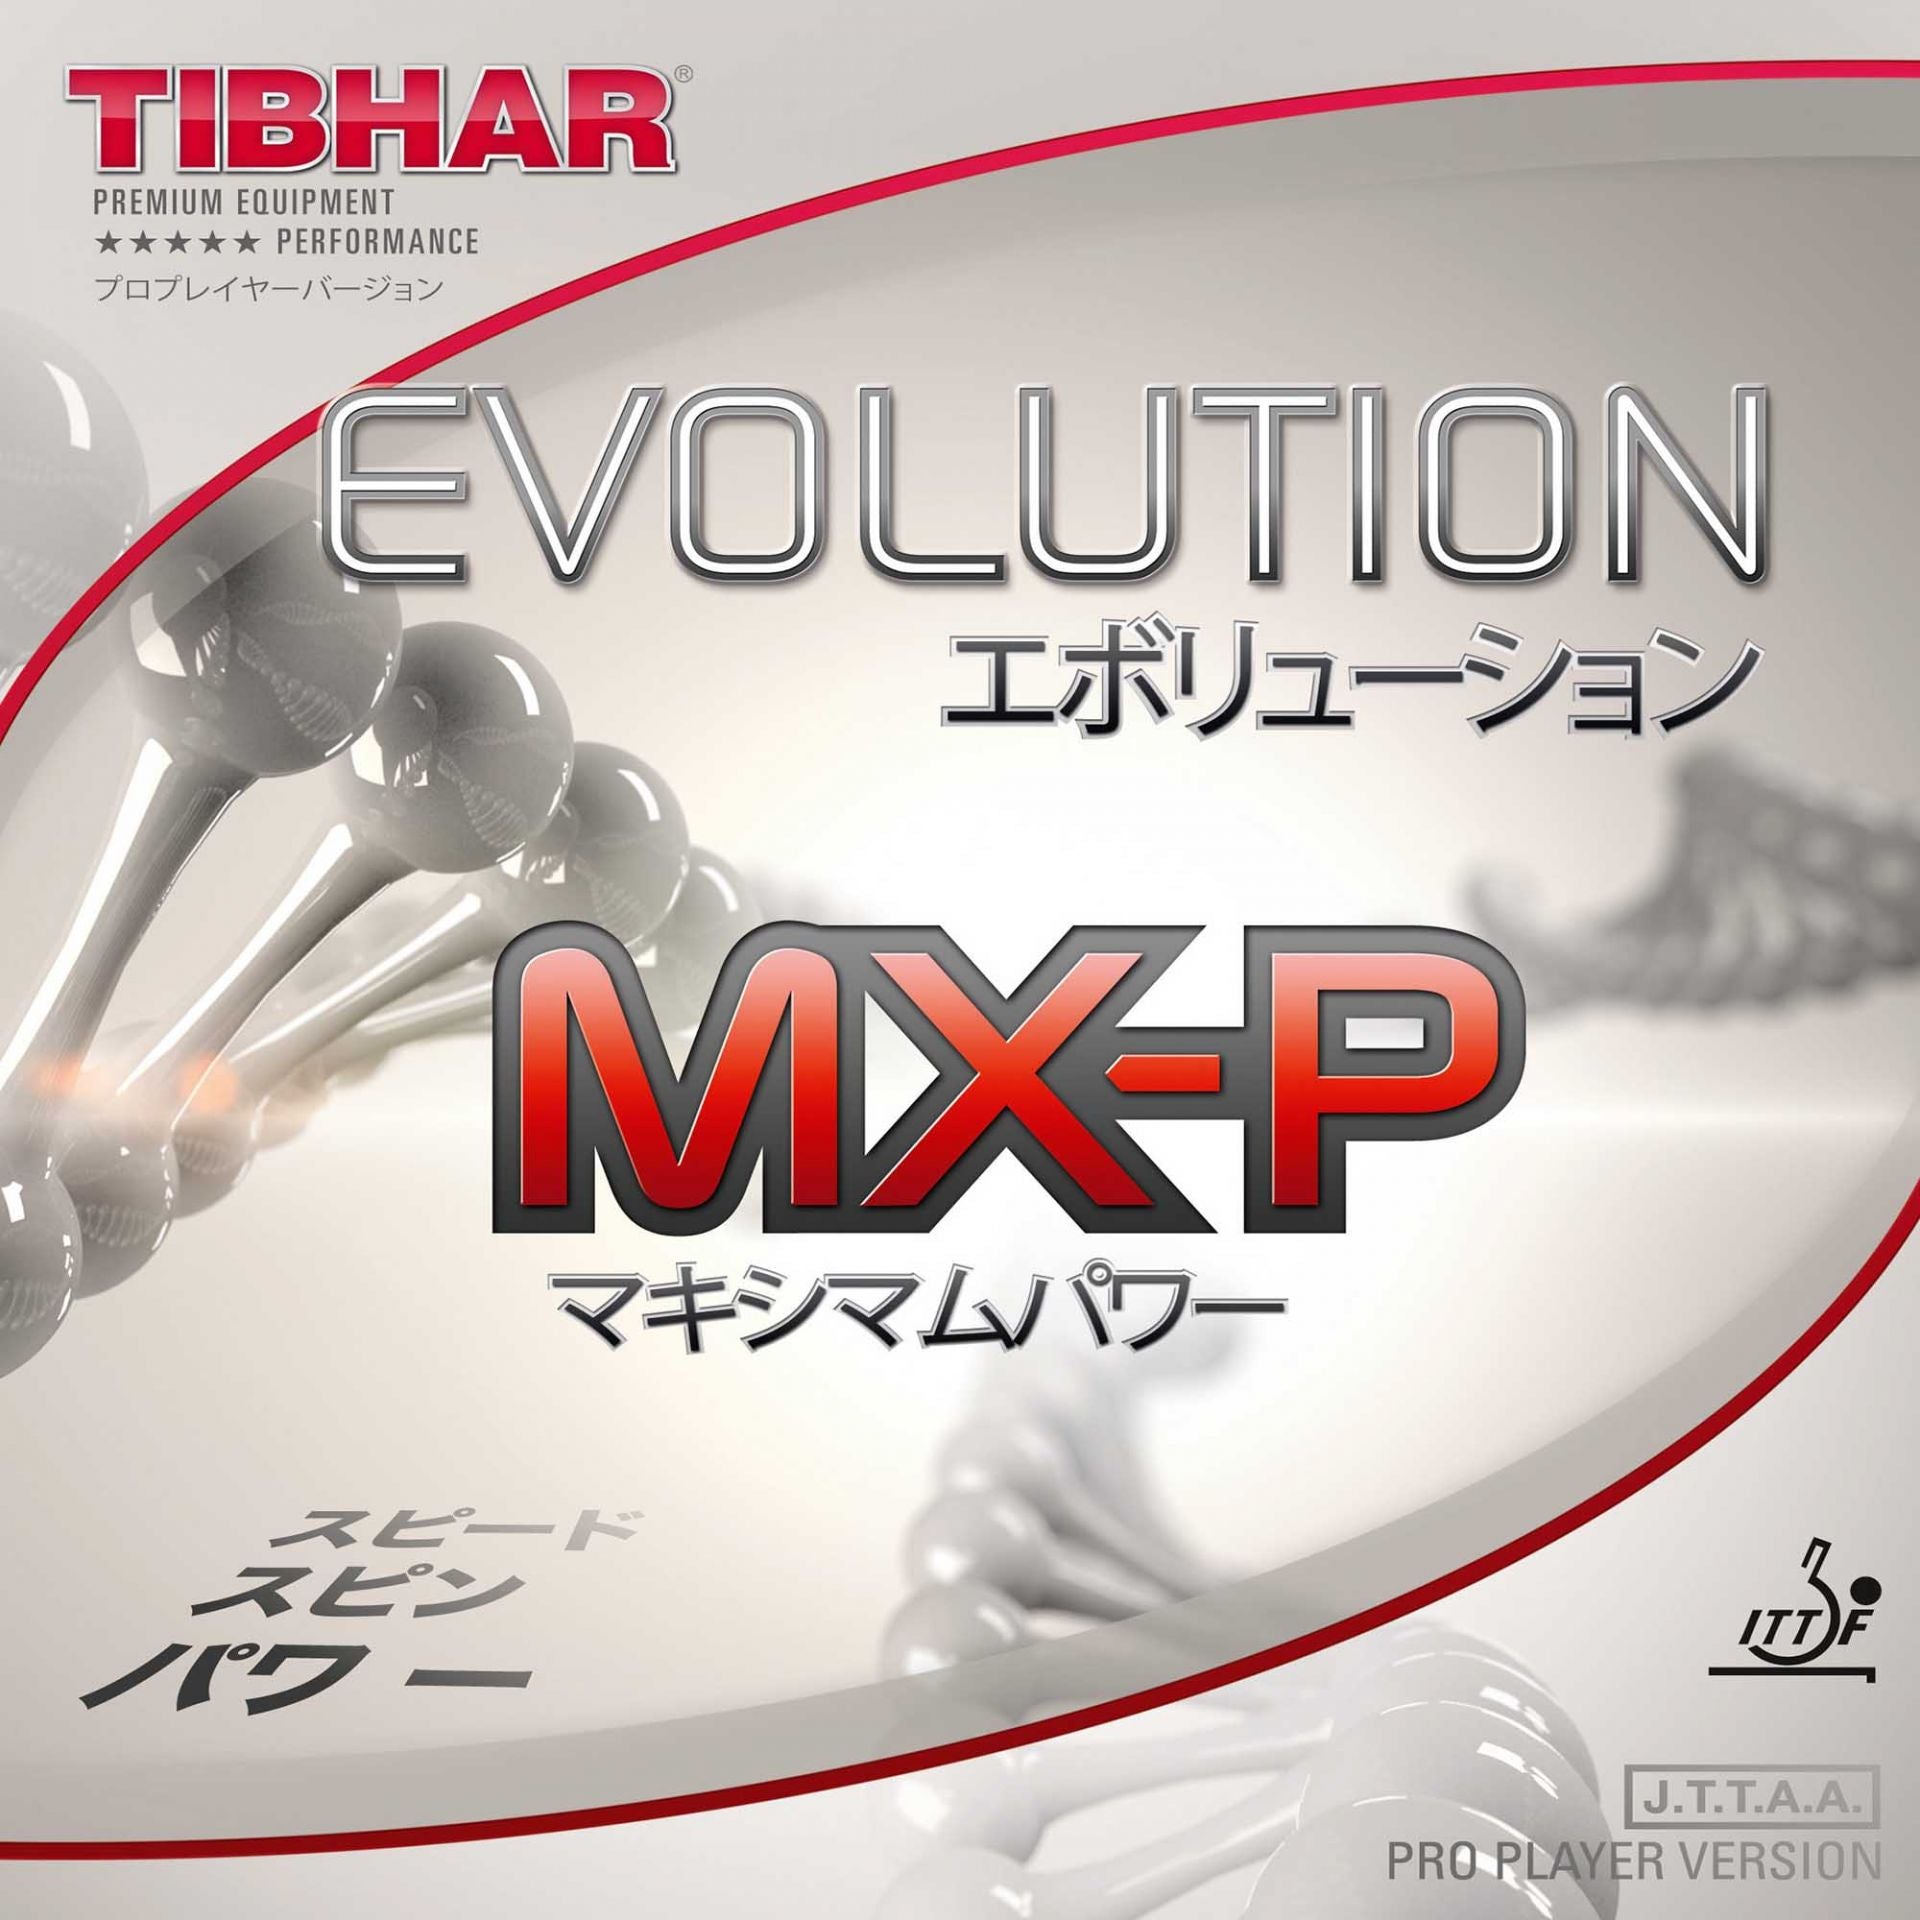 TIBHAR Evolution MX-P - Table Tennis Rubber